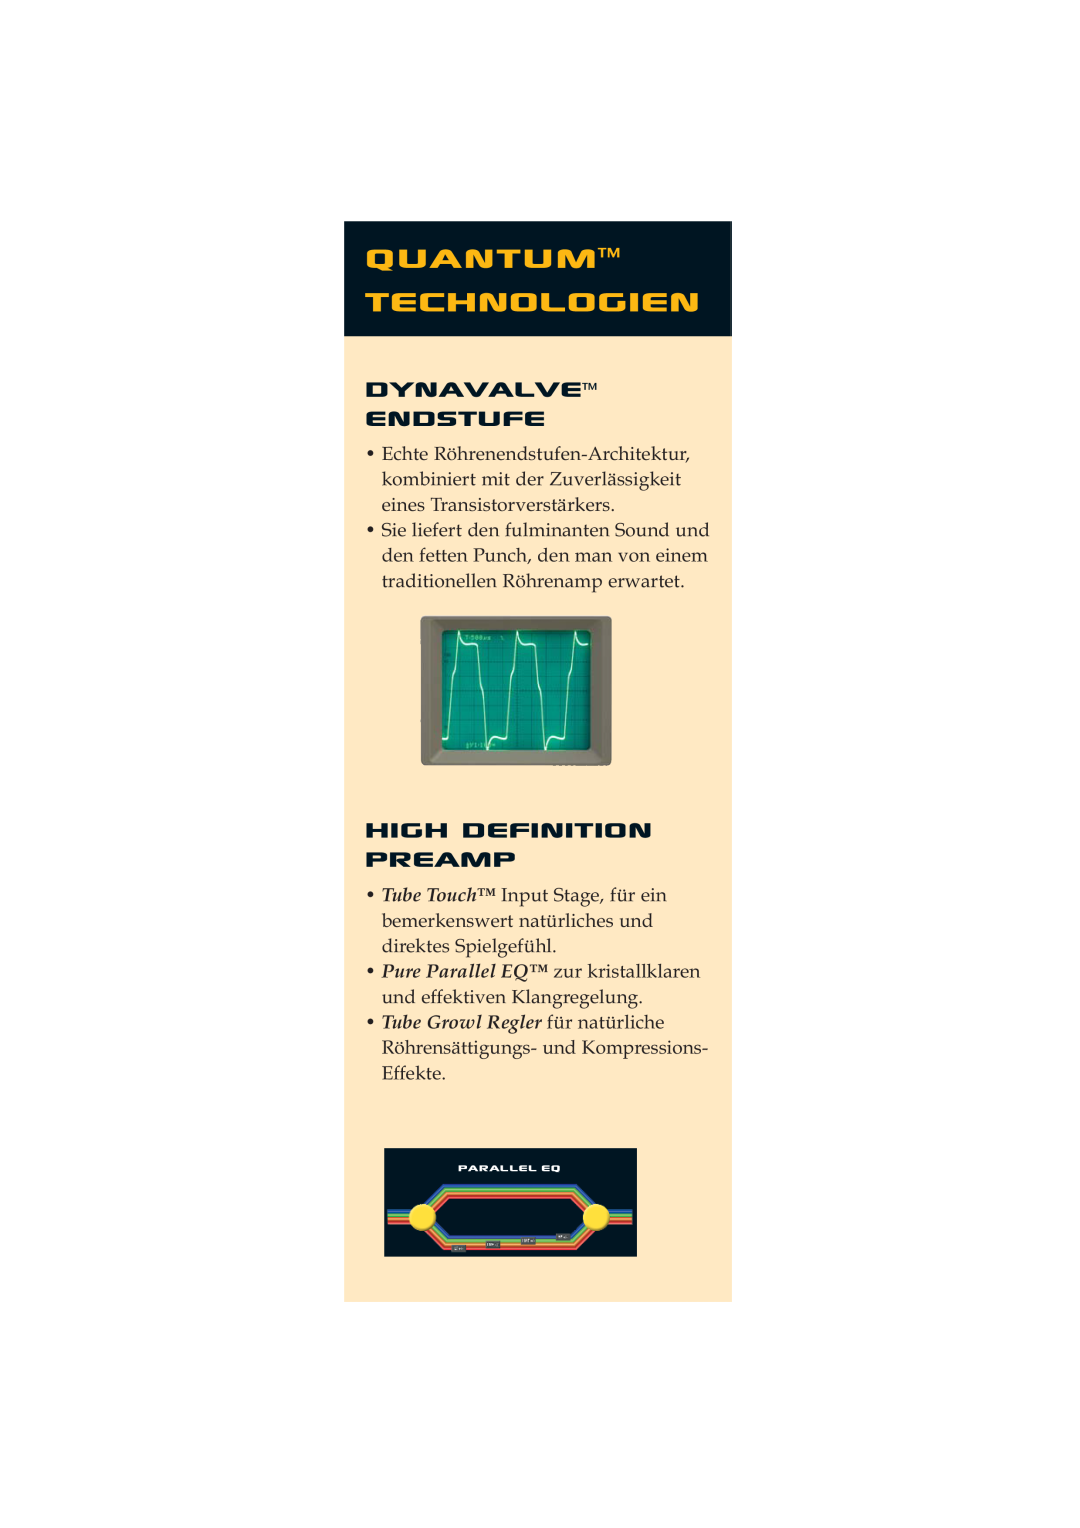 Quantum Audio Speaker manual Quantum Technologien, DynavalveTM Endstufe, High Definition Preamp 